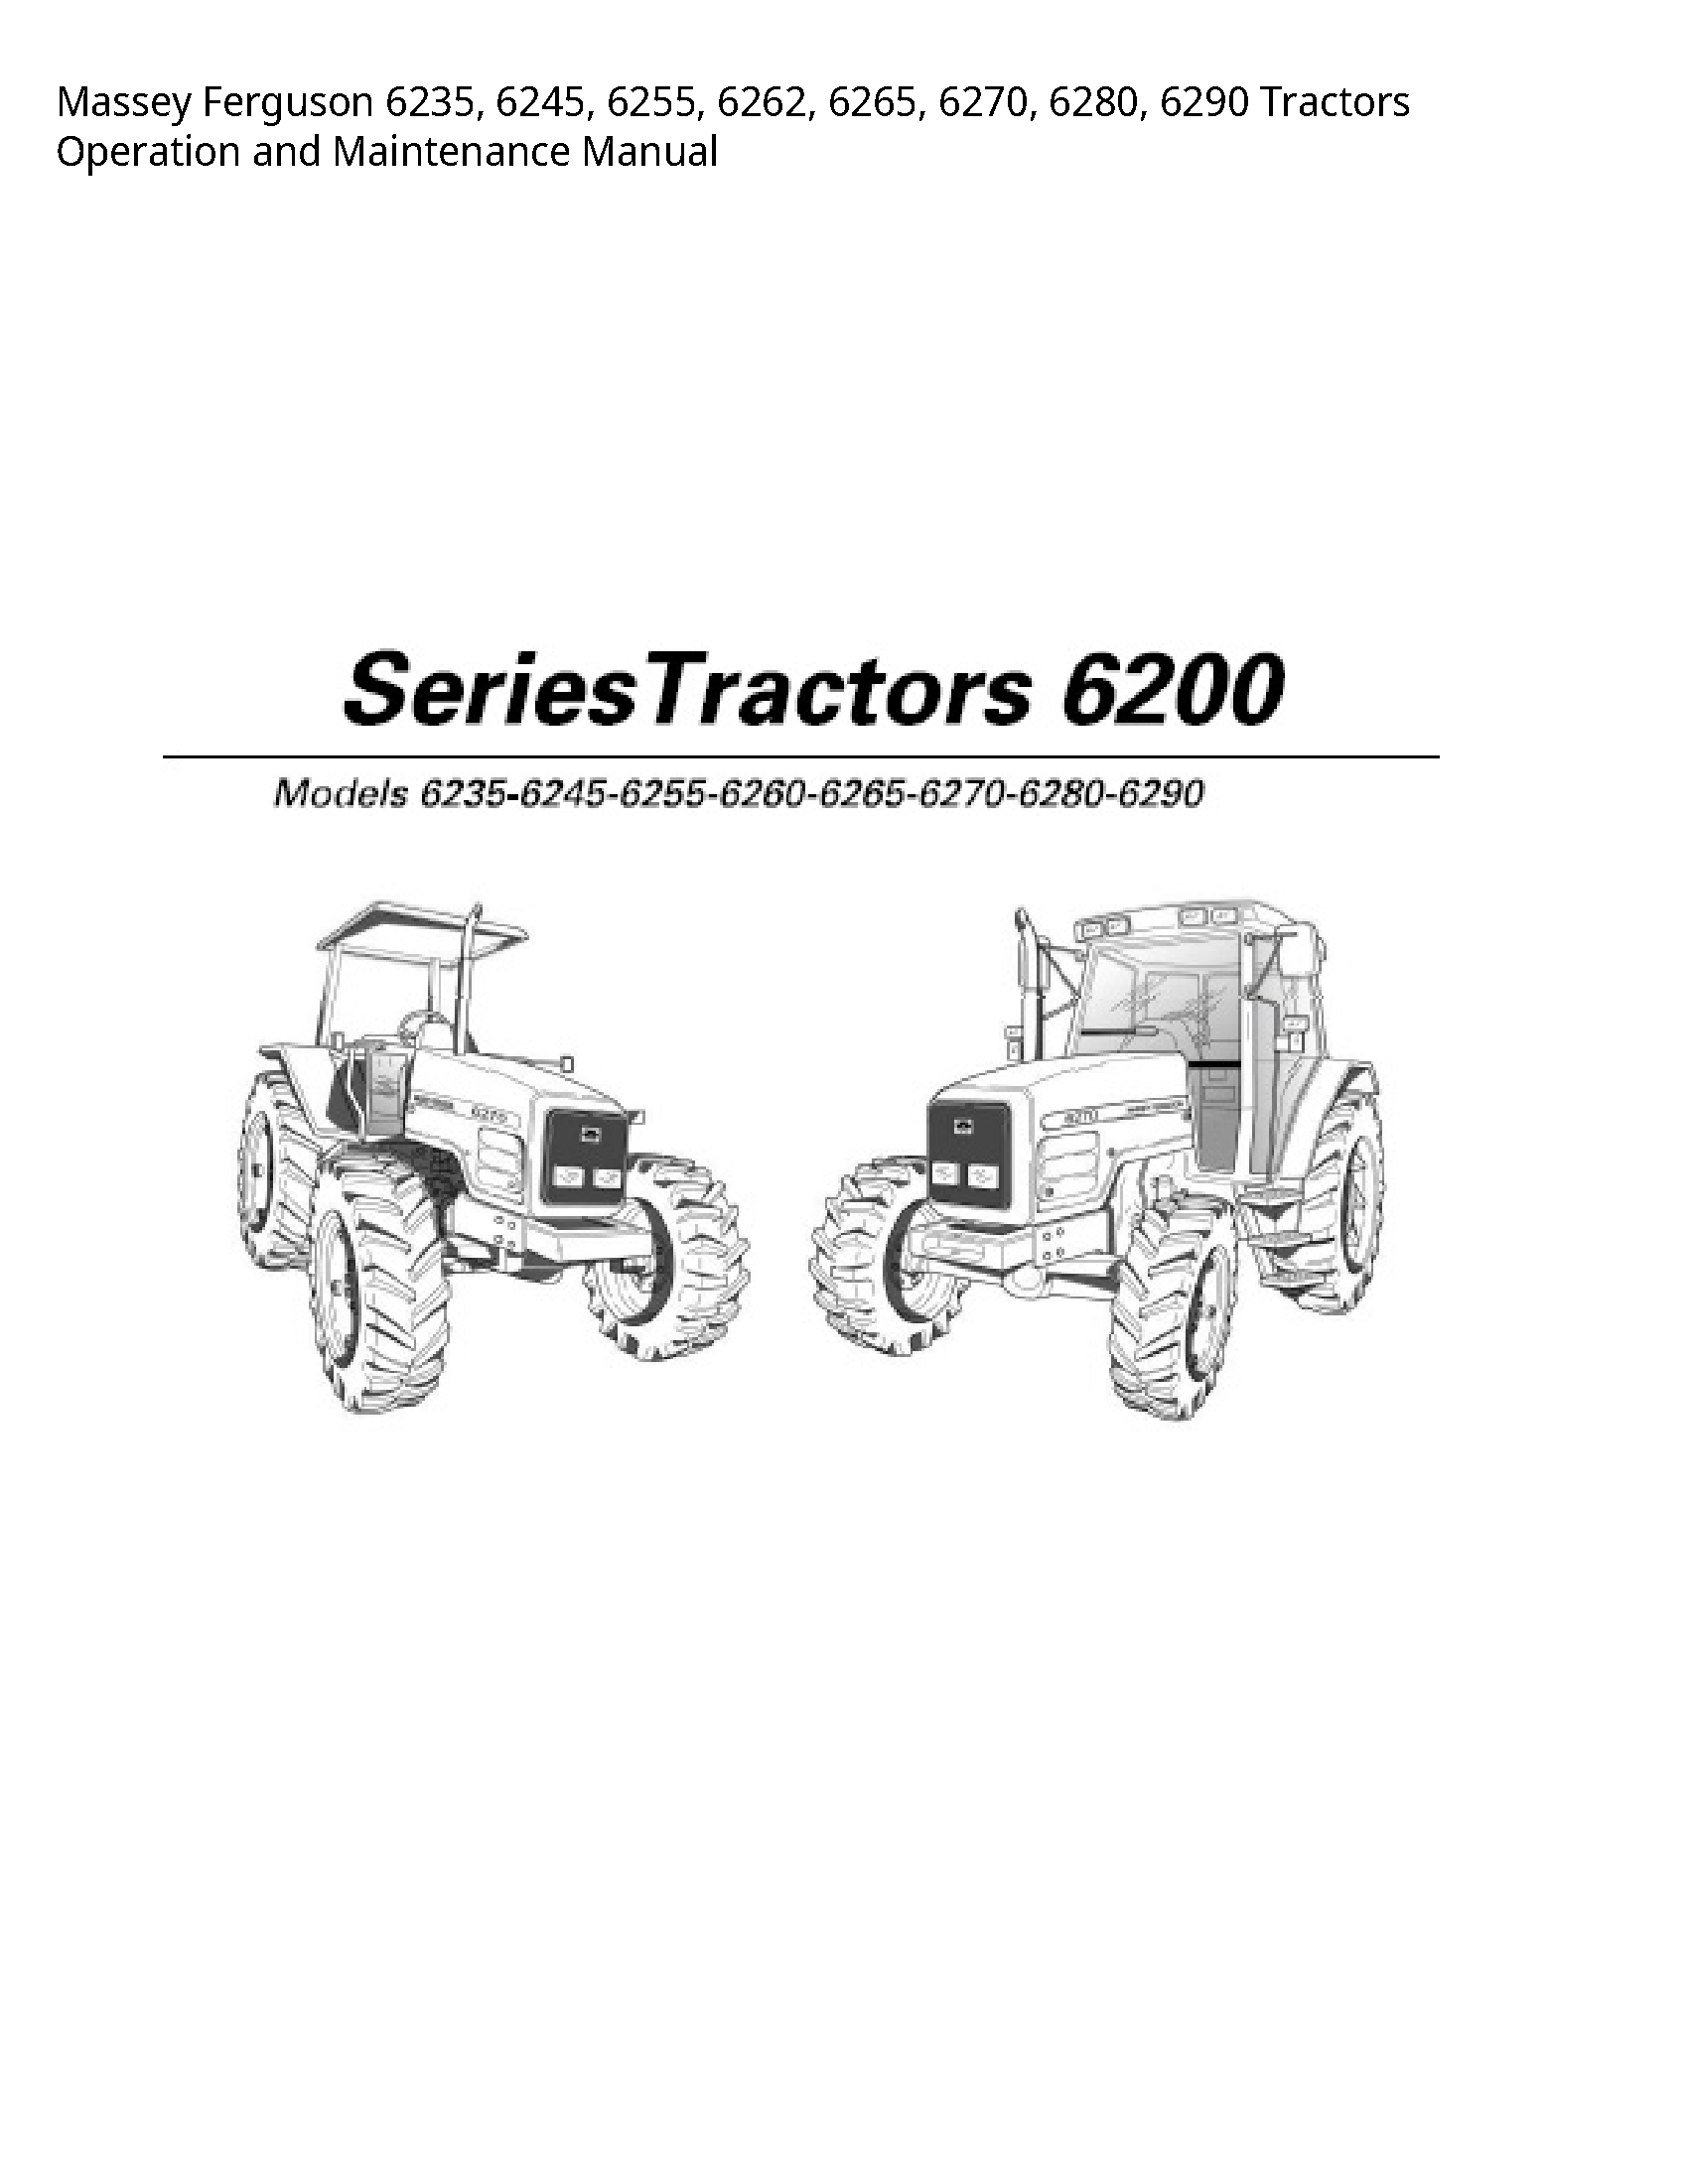 Massey Ferguson 6235 Tractors Operation  Maintenance manual